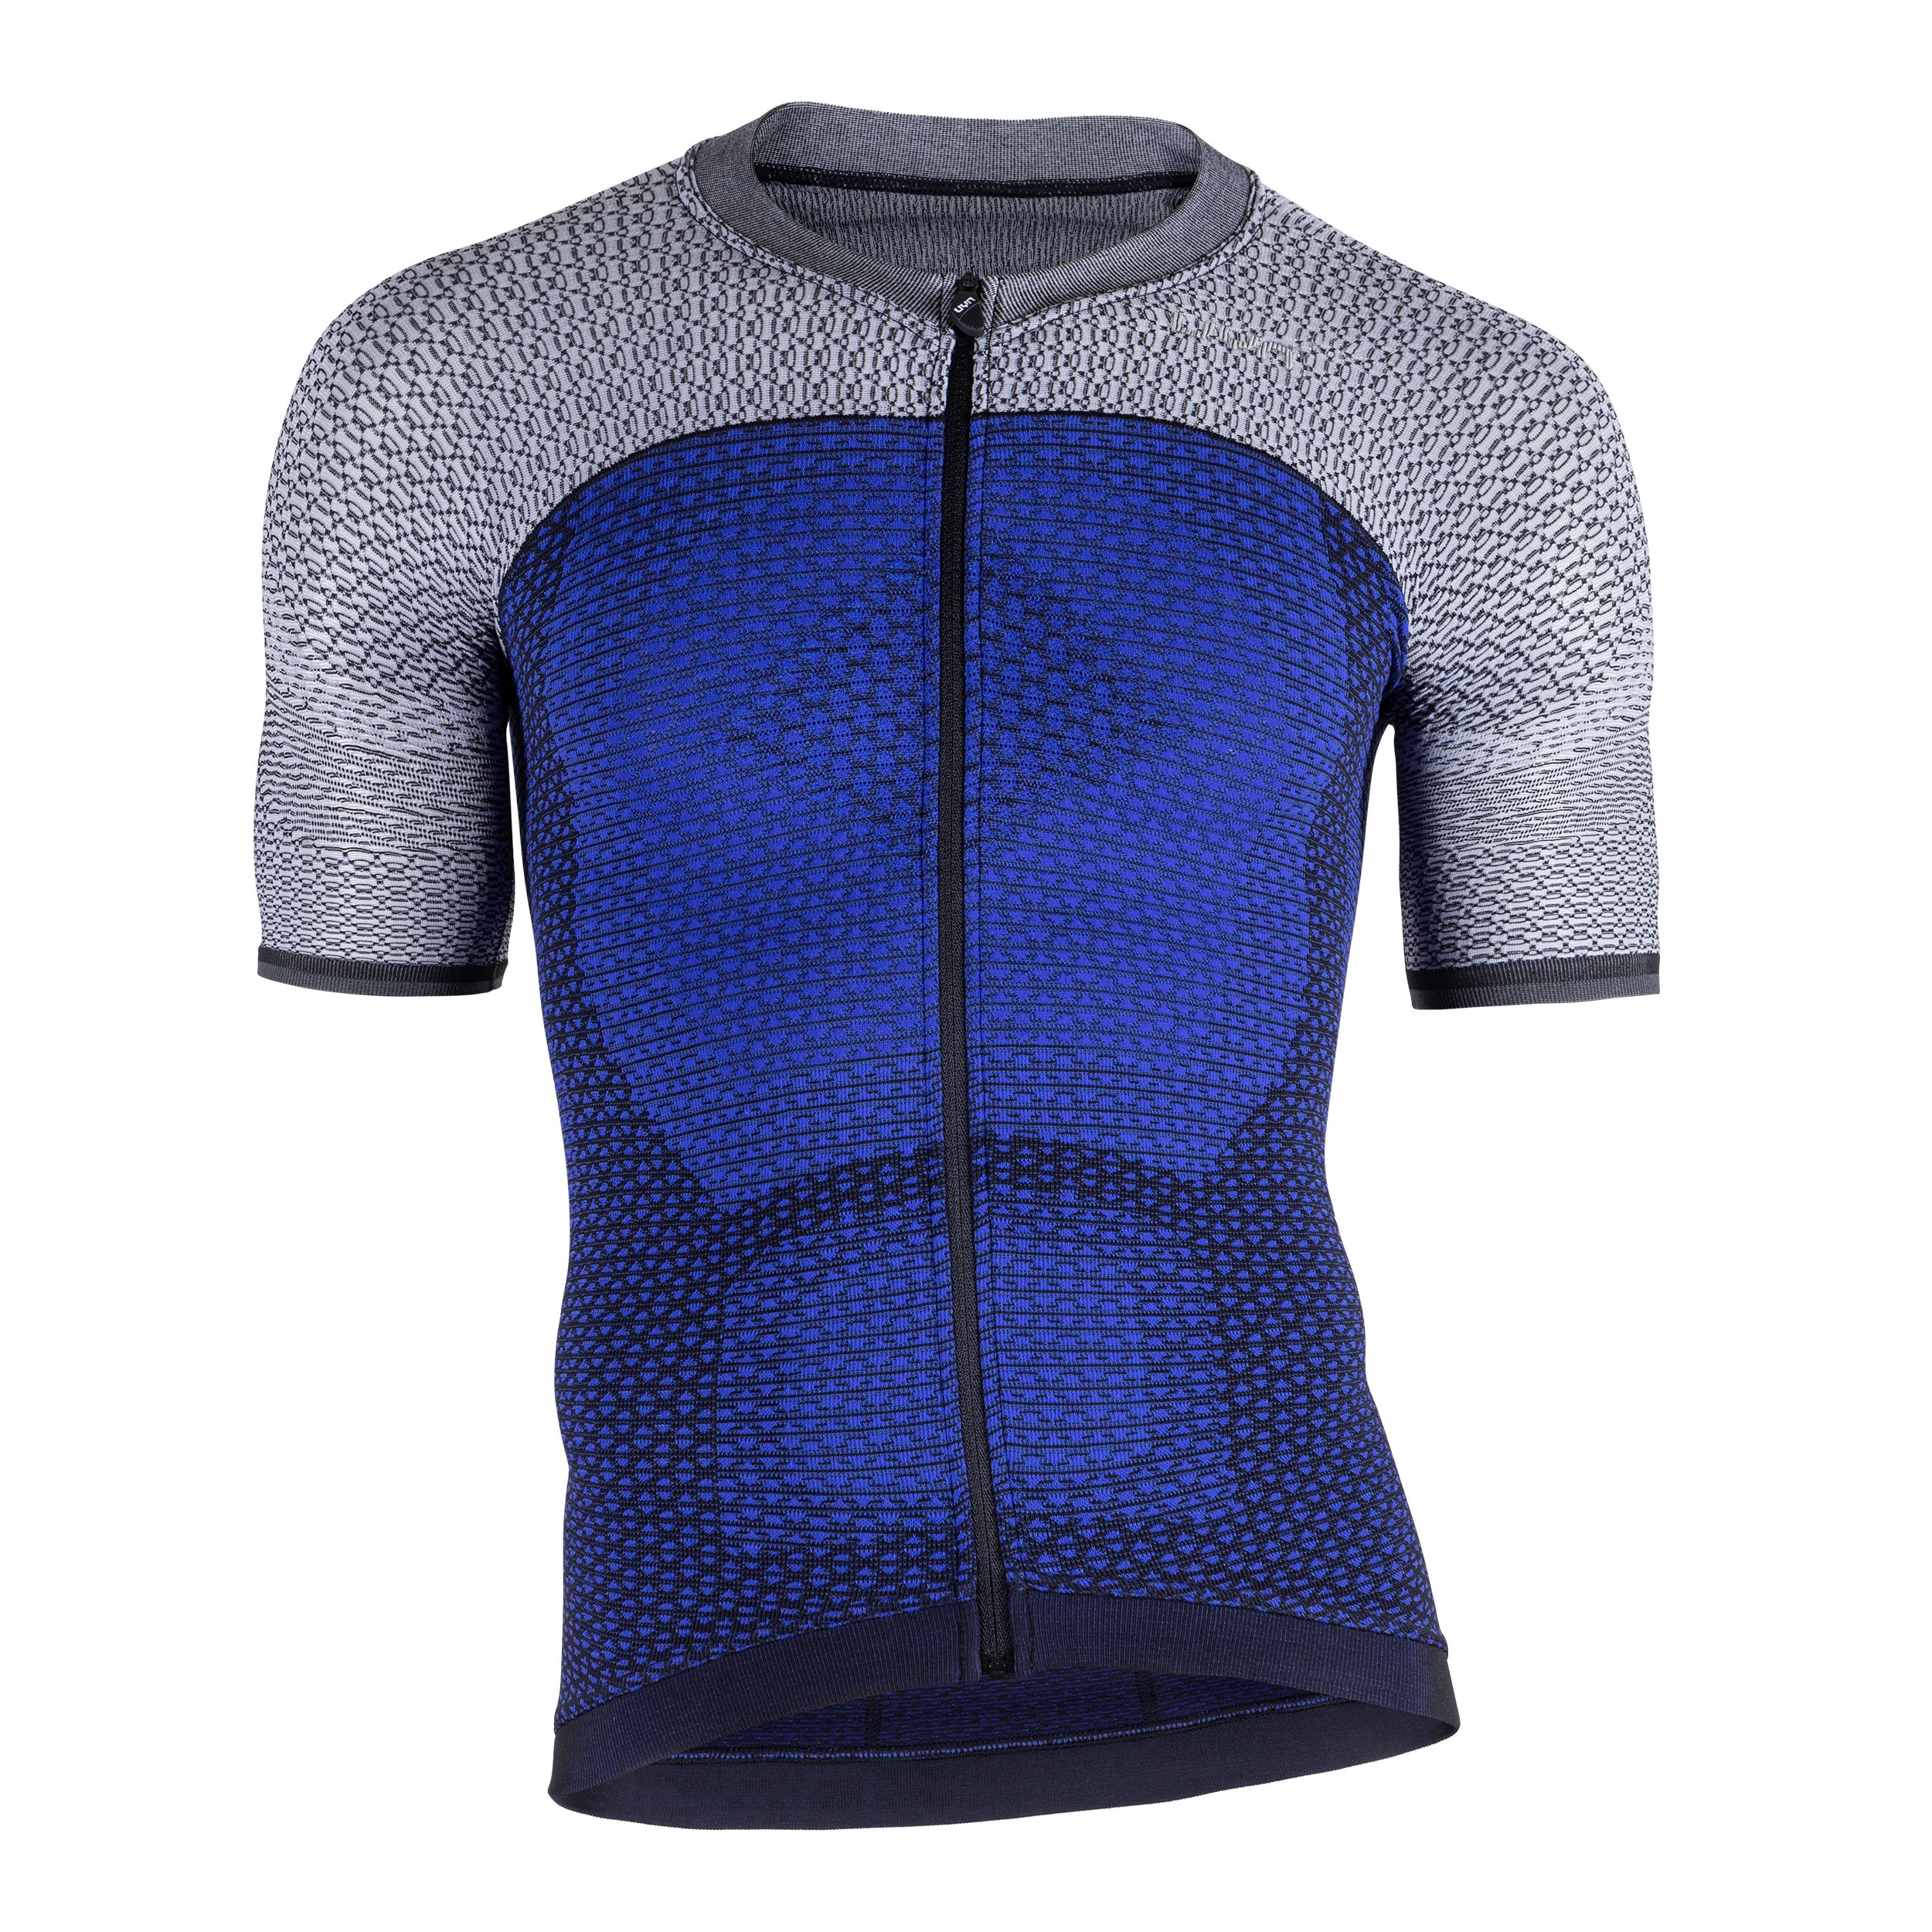 Uyn alpha maillot de cyclisme manches courtes medieval bleu sleet gris